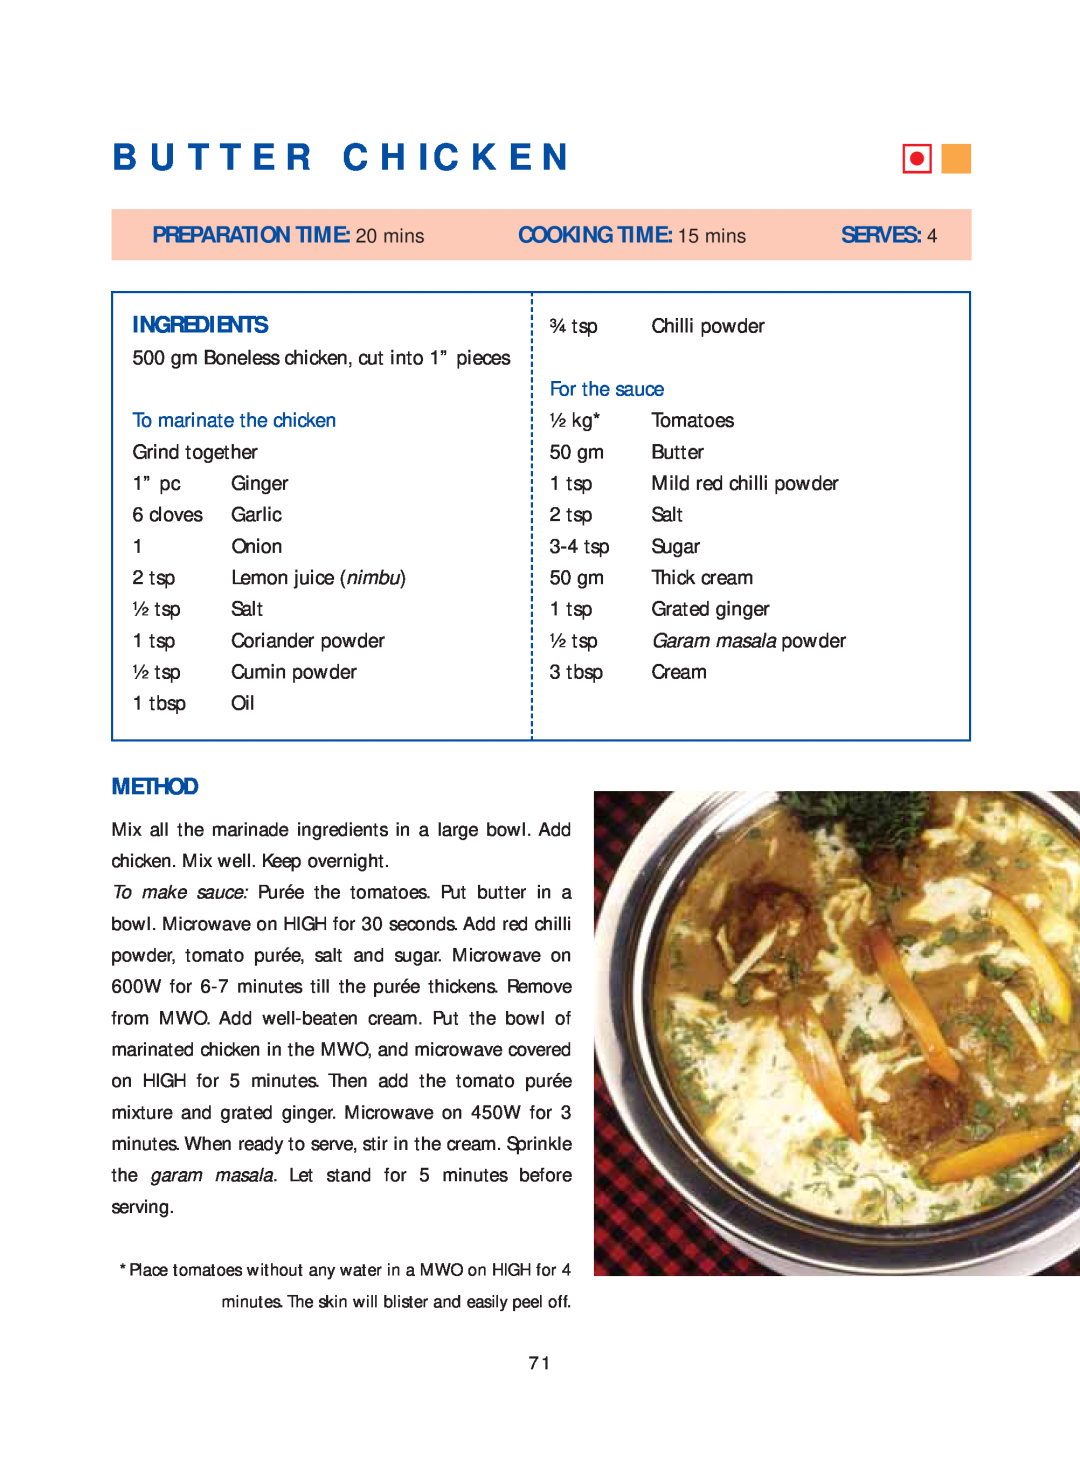 Samsung Microwave Oven warranty Butter Chicken, For the sauce, To marinate the chicken, Garam masala powder 